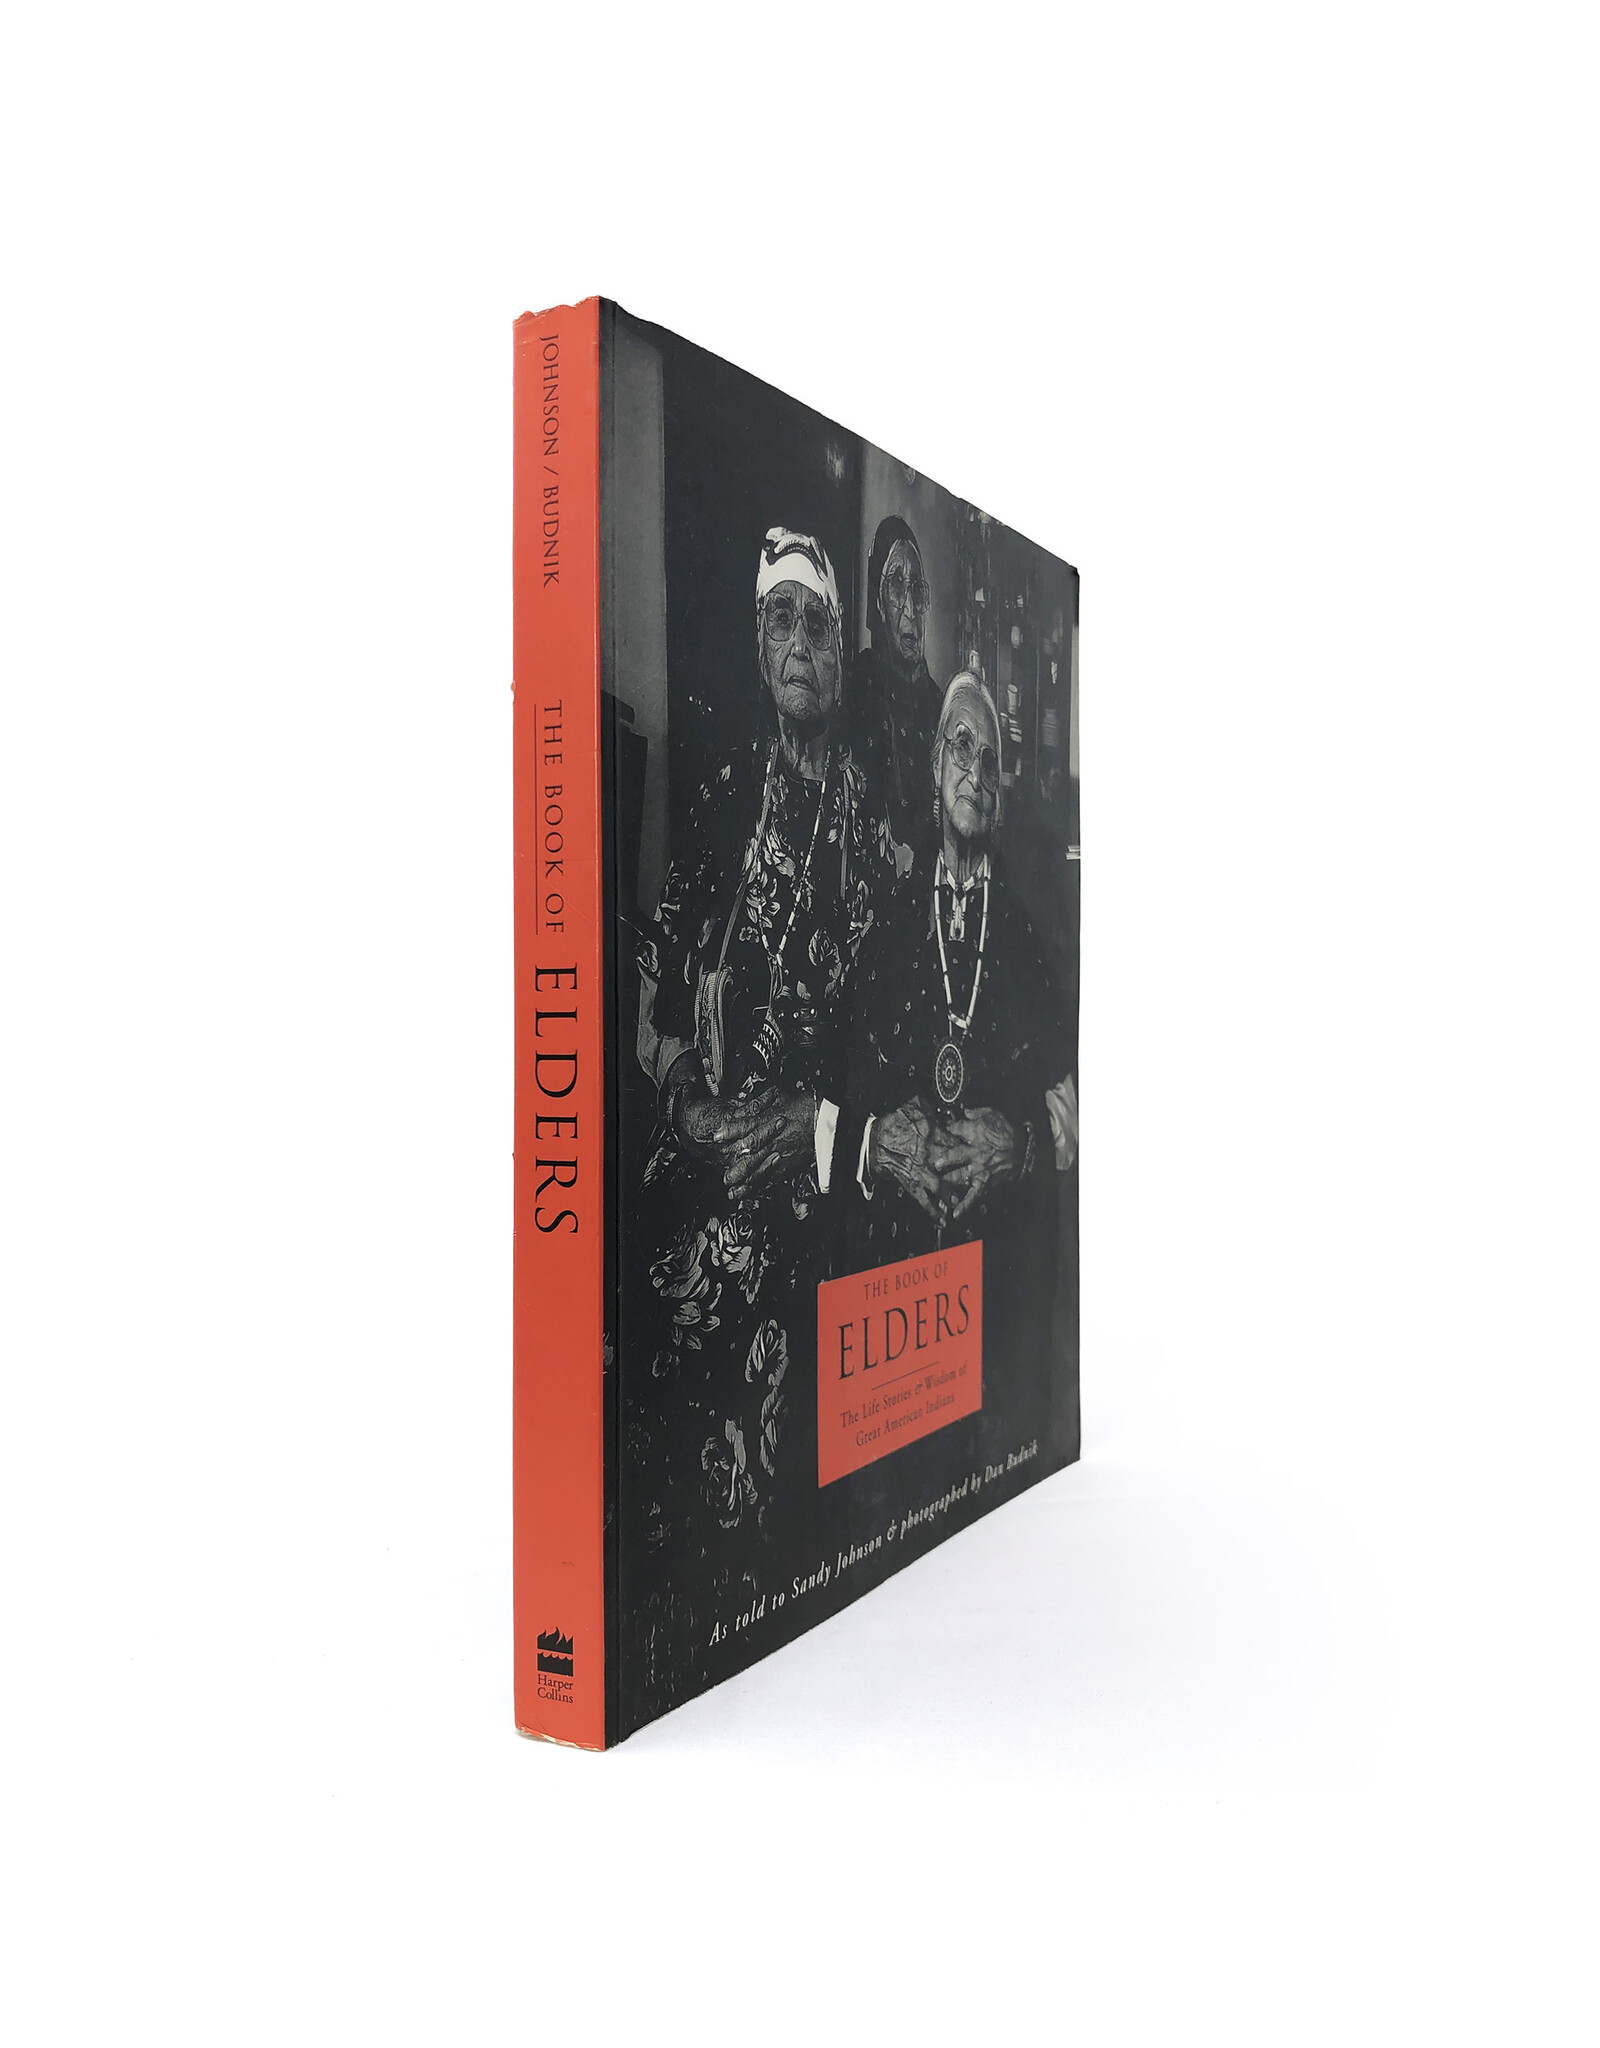 HarperCollins Pub. Book of Elders: The Life Stories & Wisdom of Great American Indians